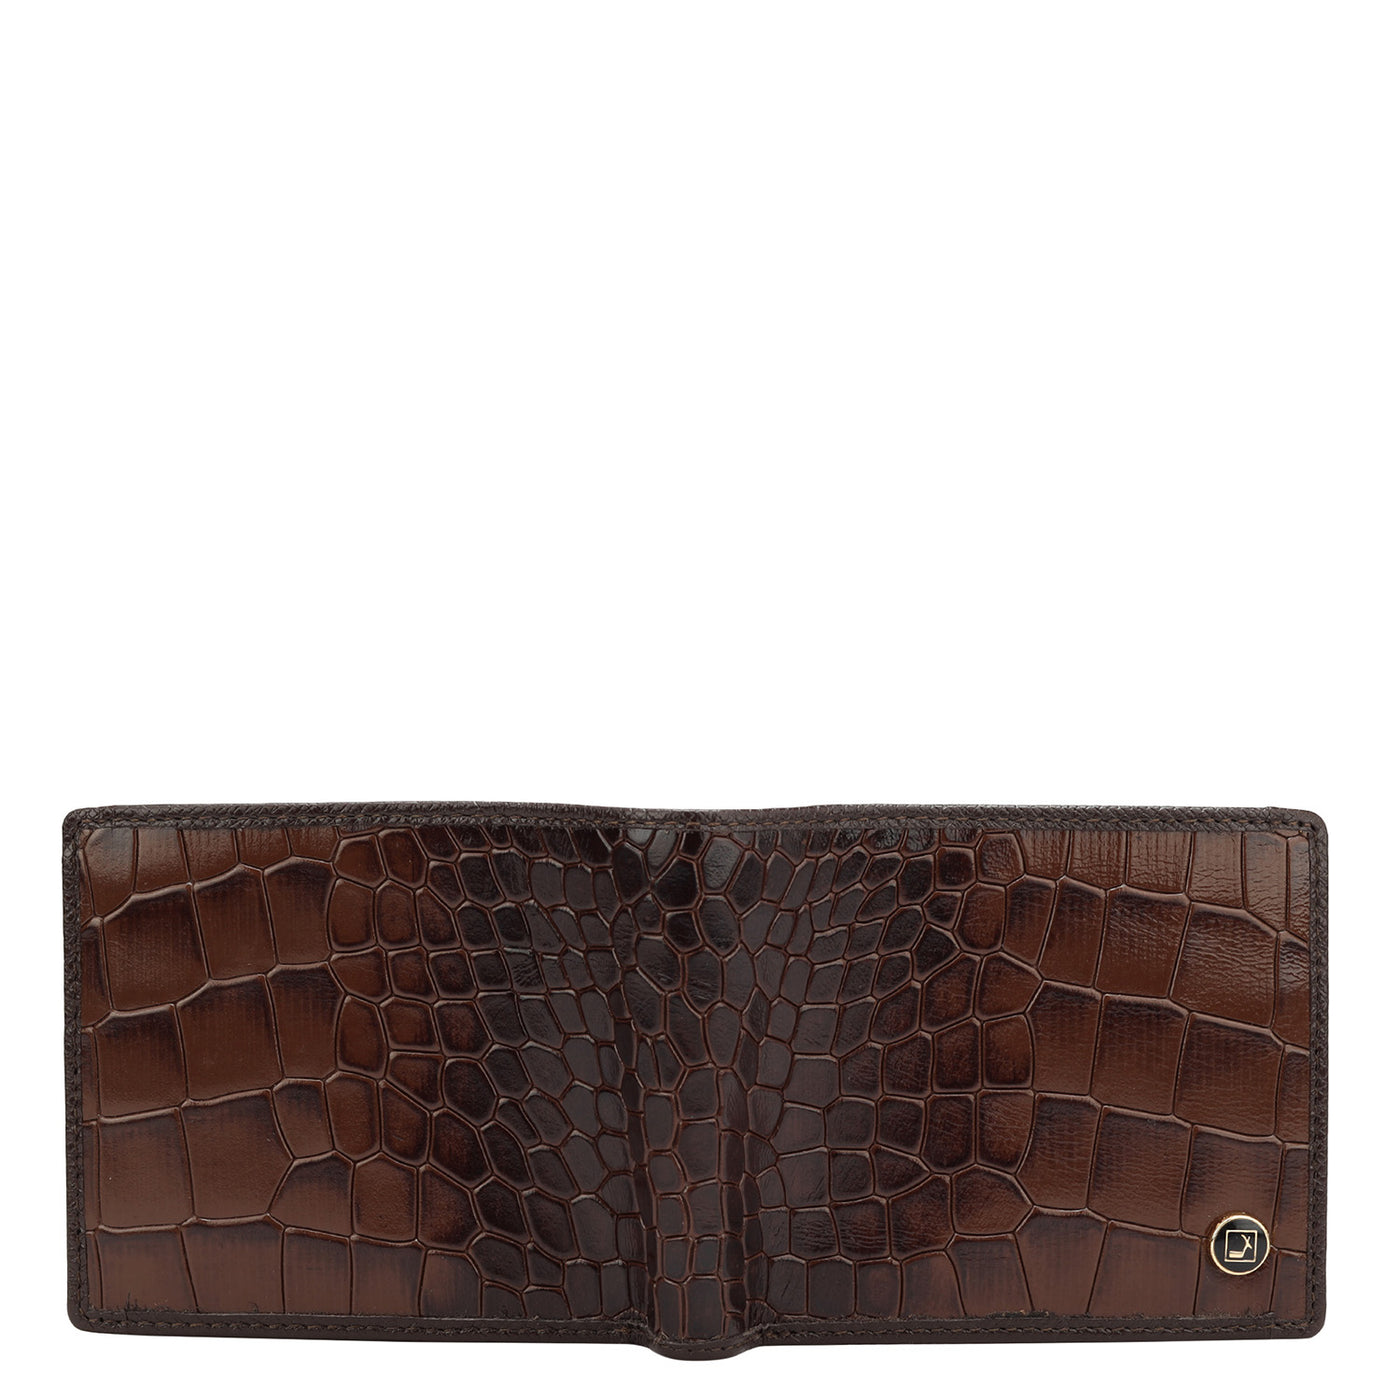 Croco Leather Mens Wallet - Brown